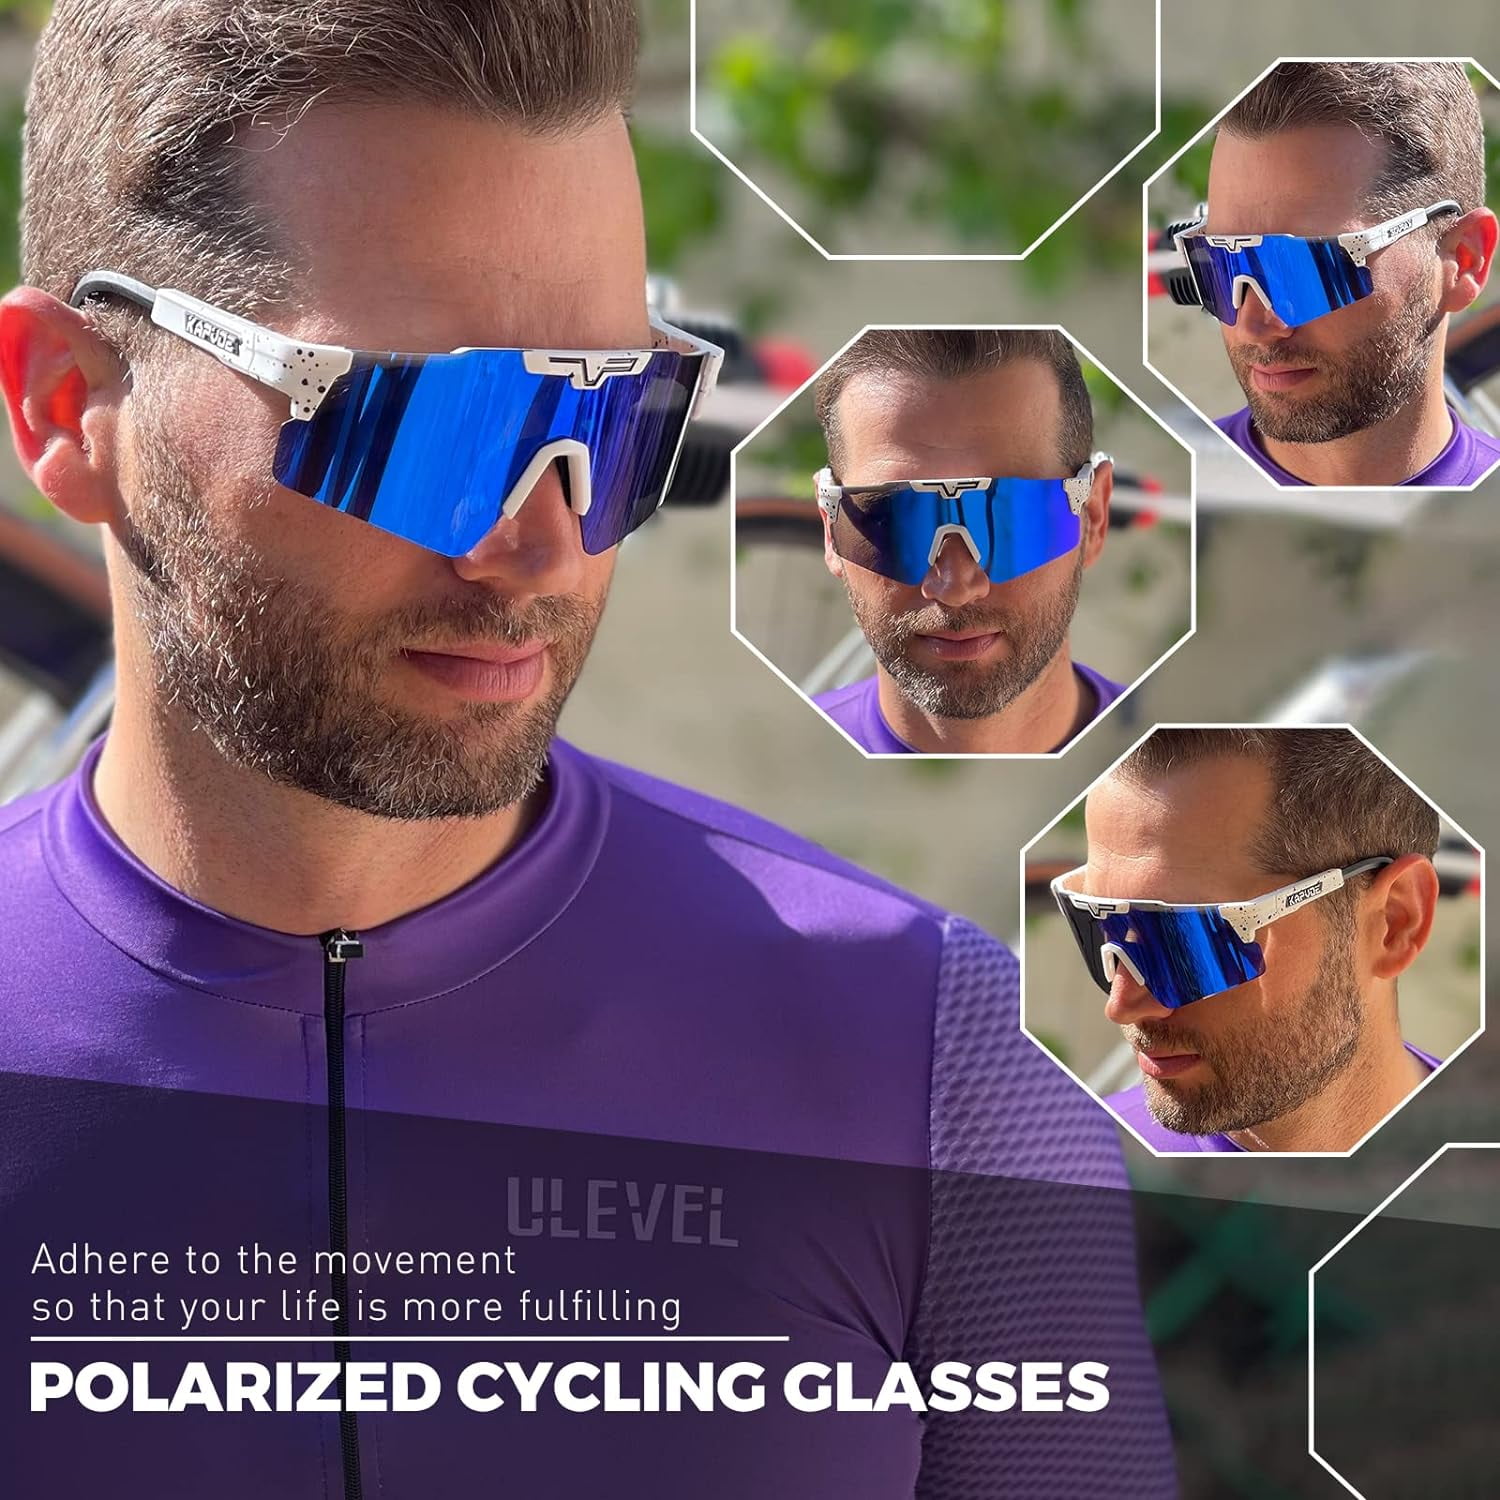 KAPVOE Polarized Cycling Sunglasses UV400 Protection for Men Women